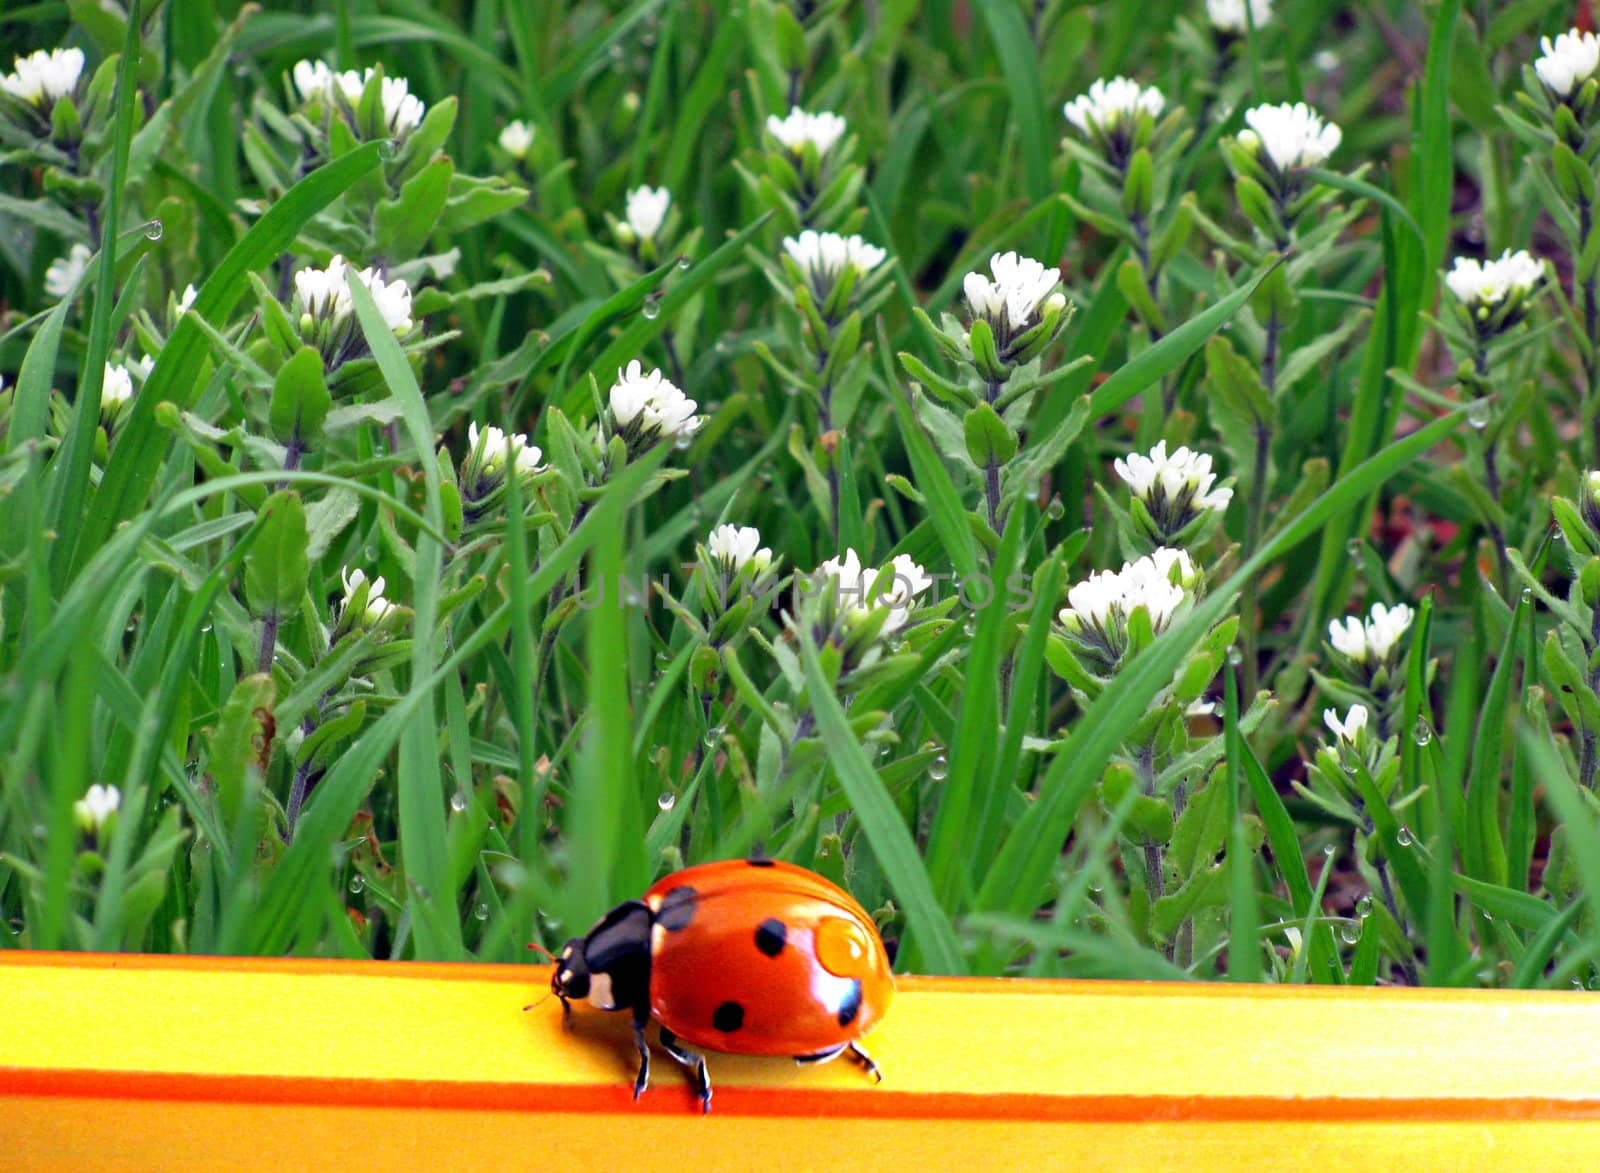 ladybug on a pencil over grass